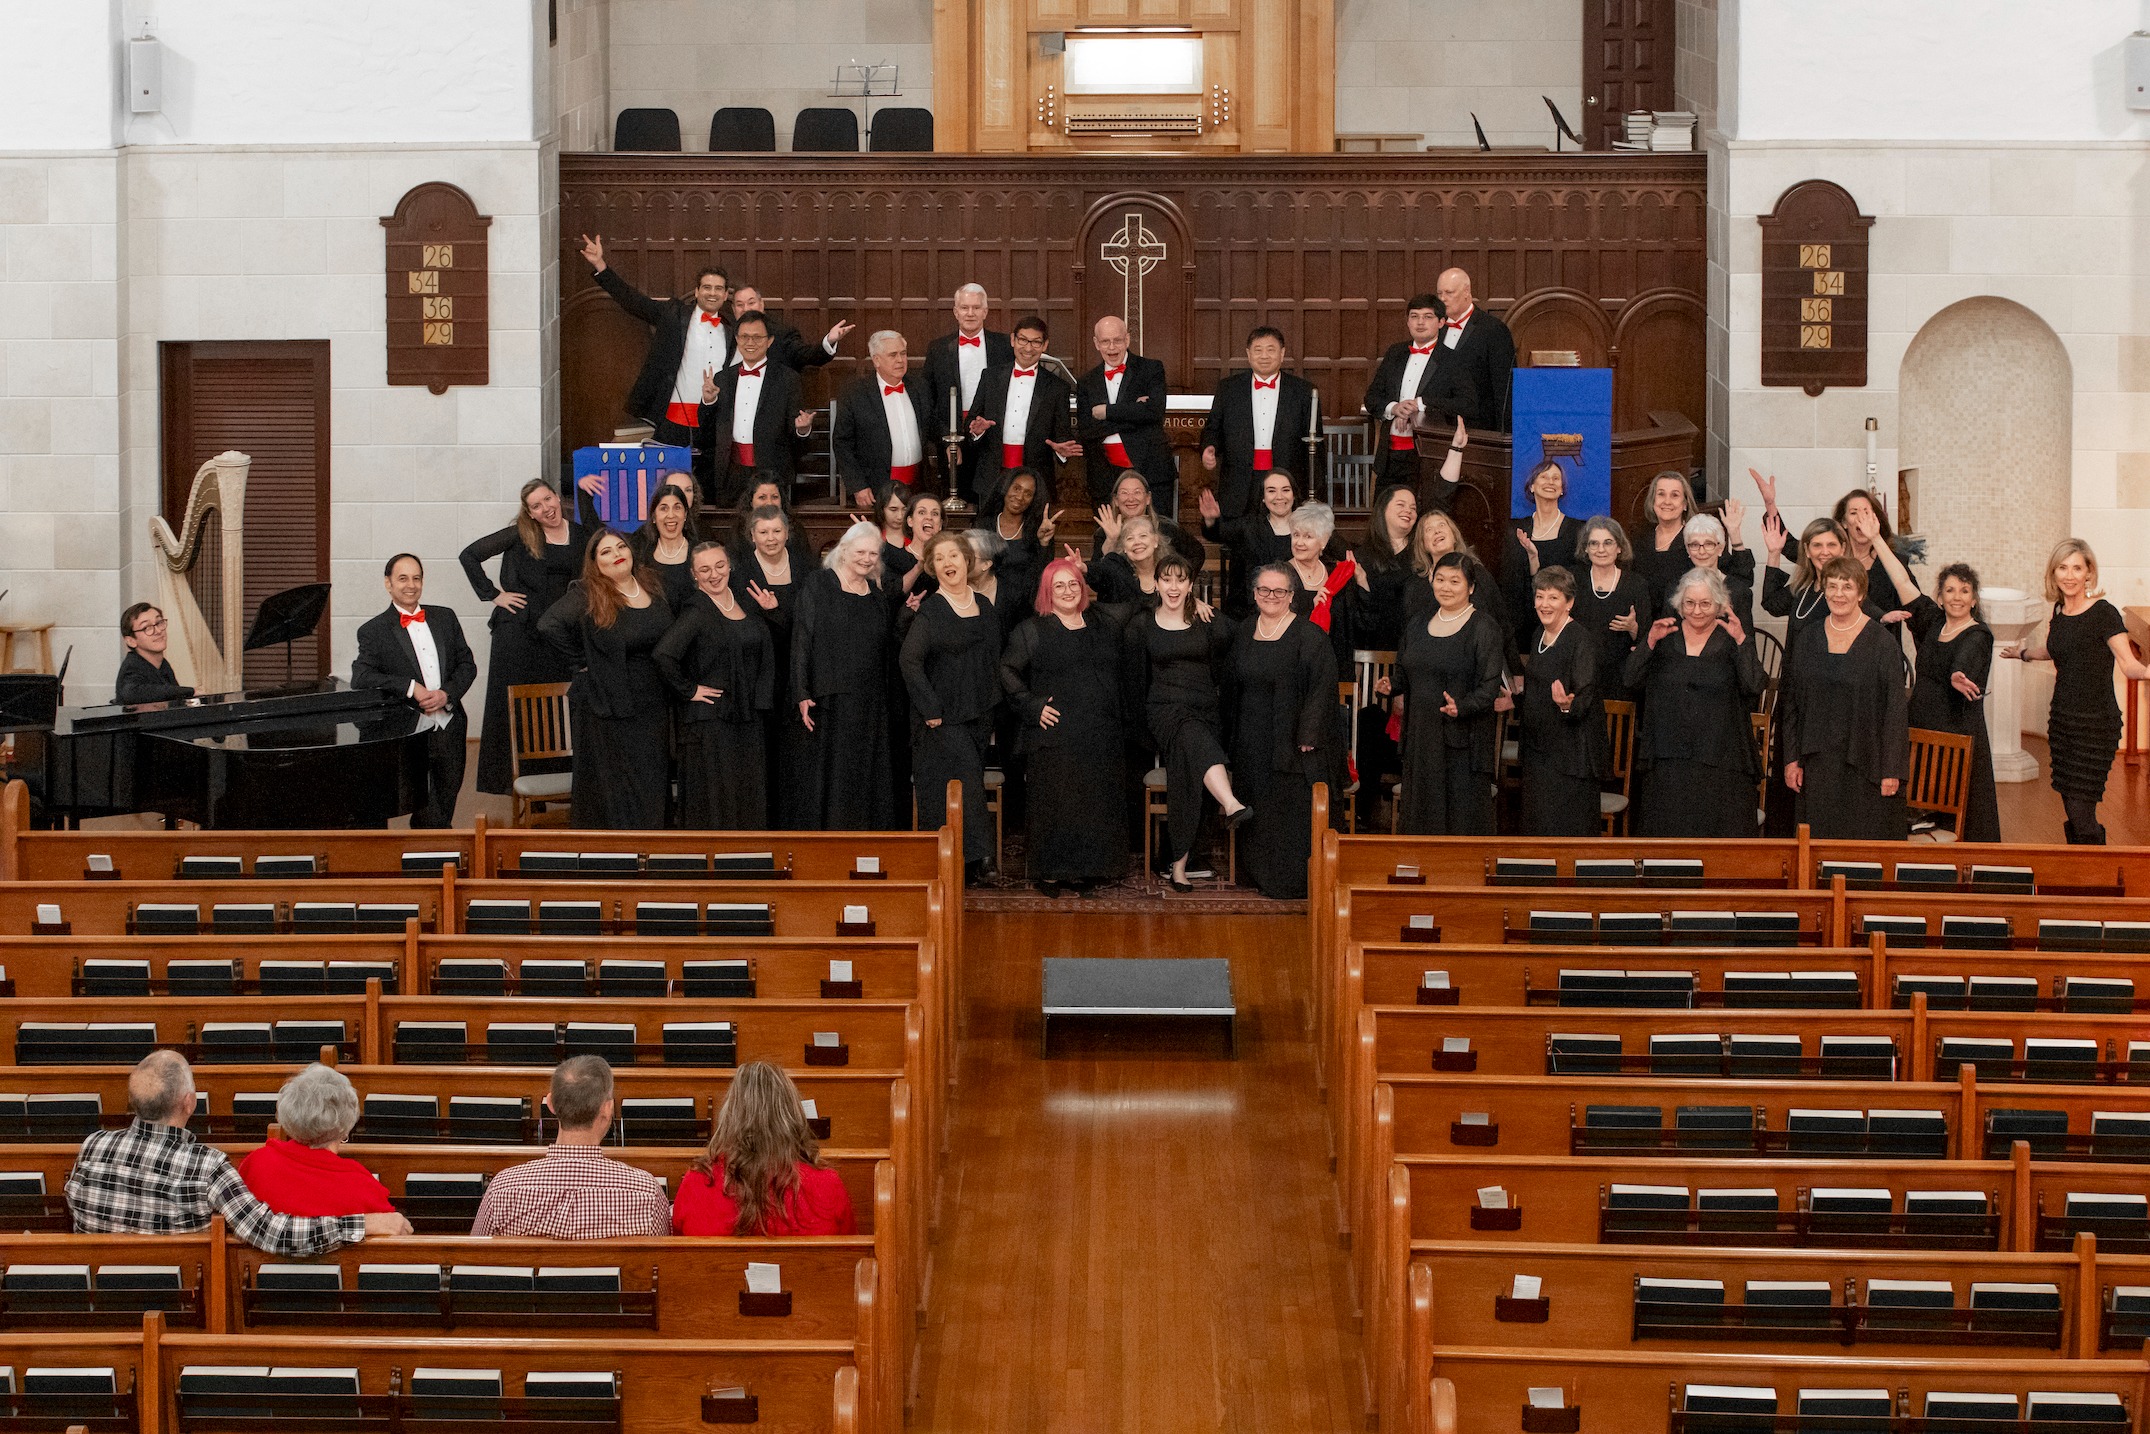 Houston Masterworks Chorus